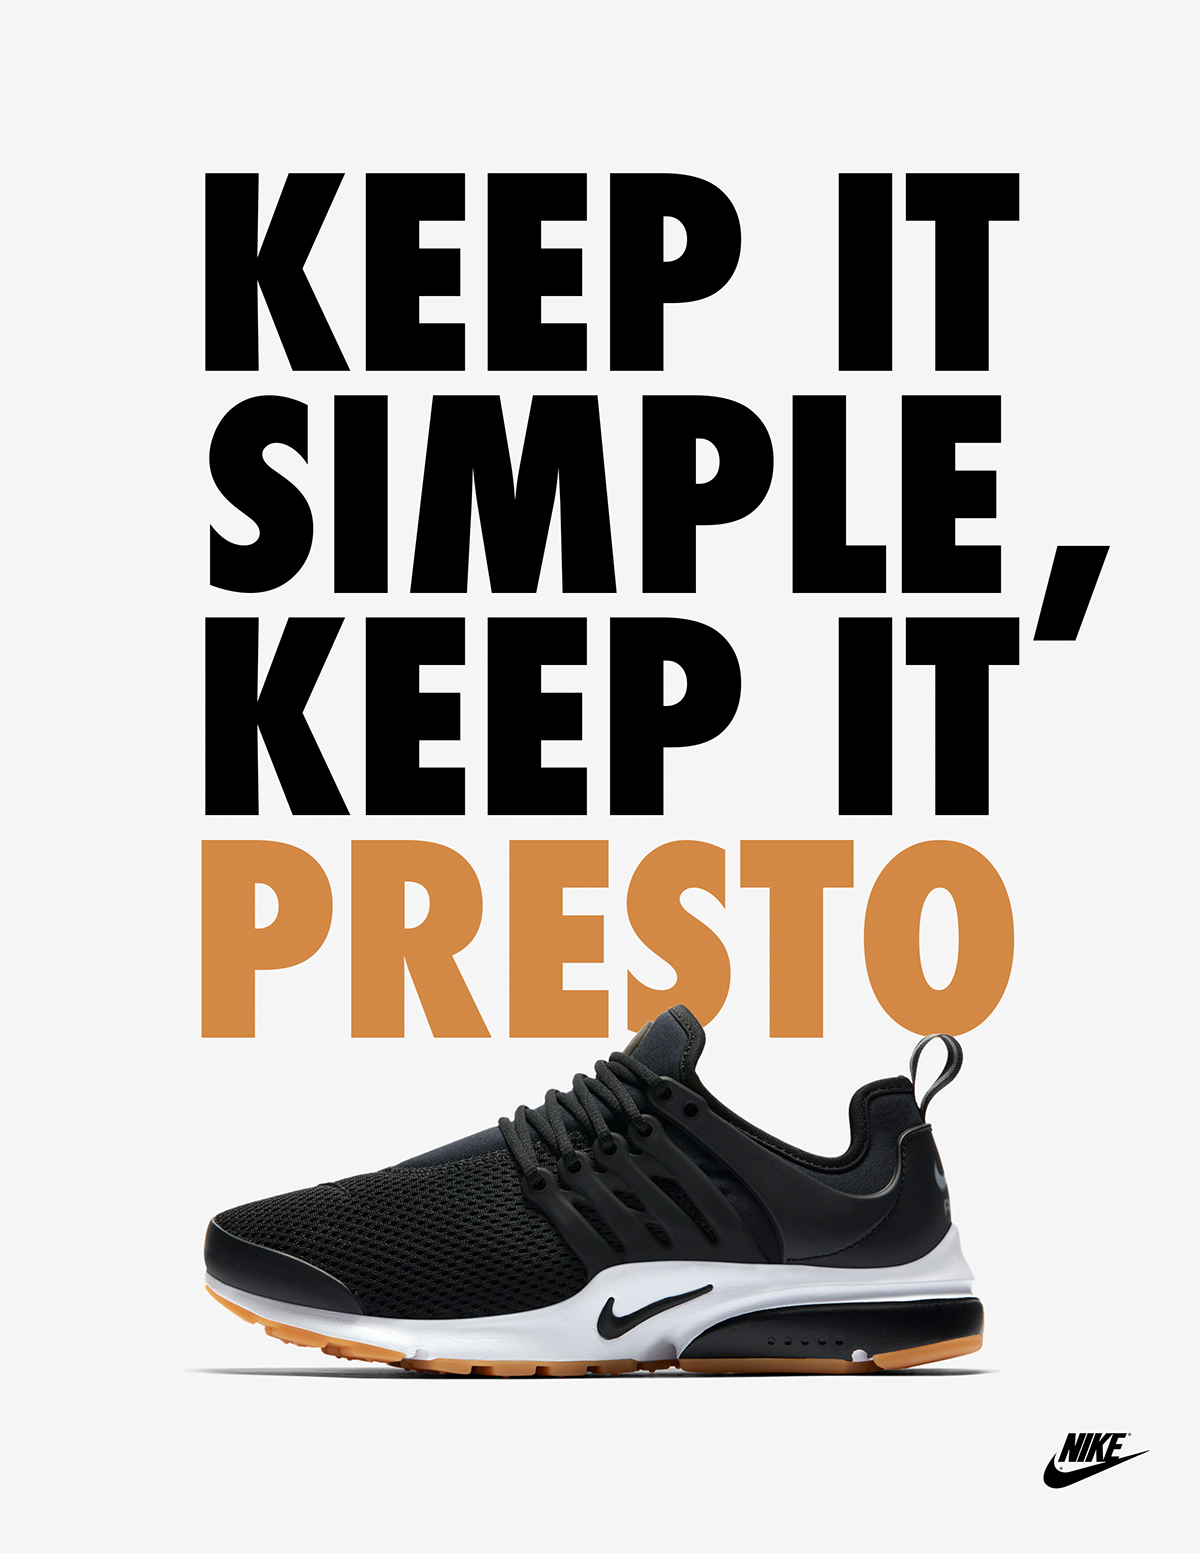 Nike Presto comfort brands popular